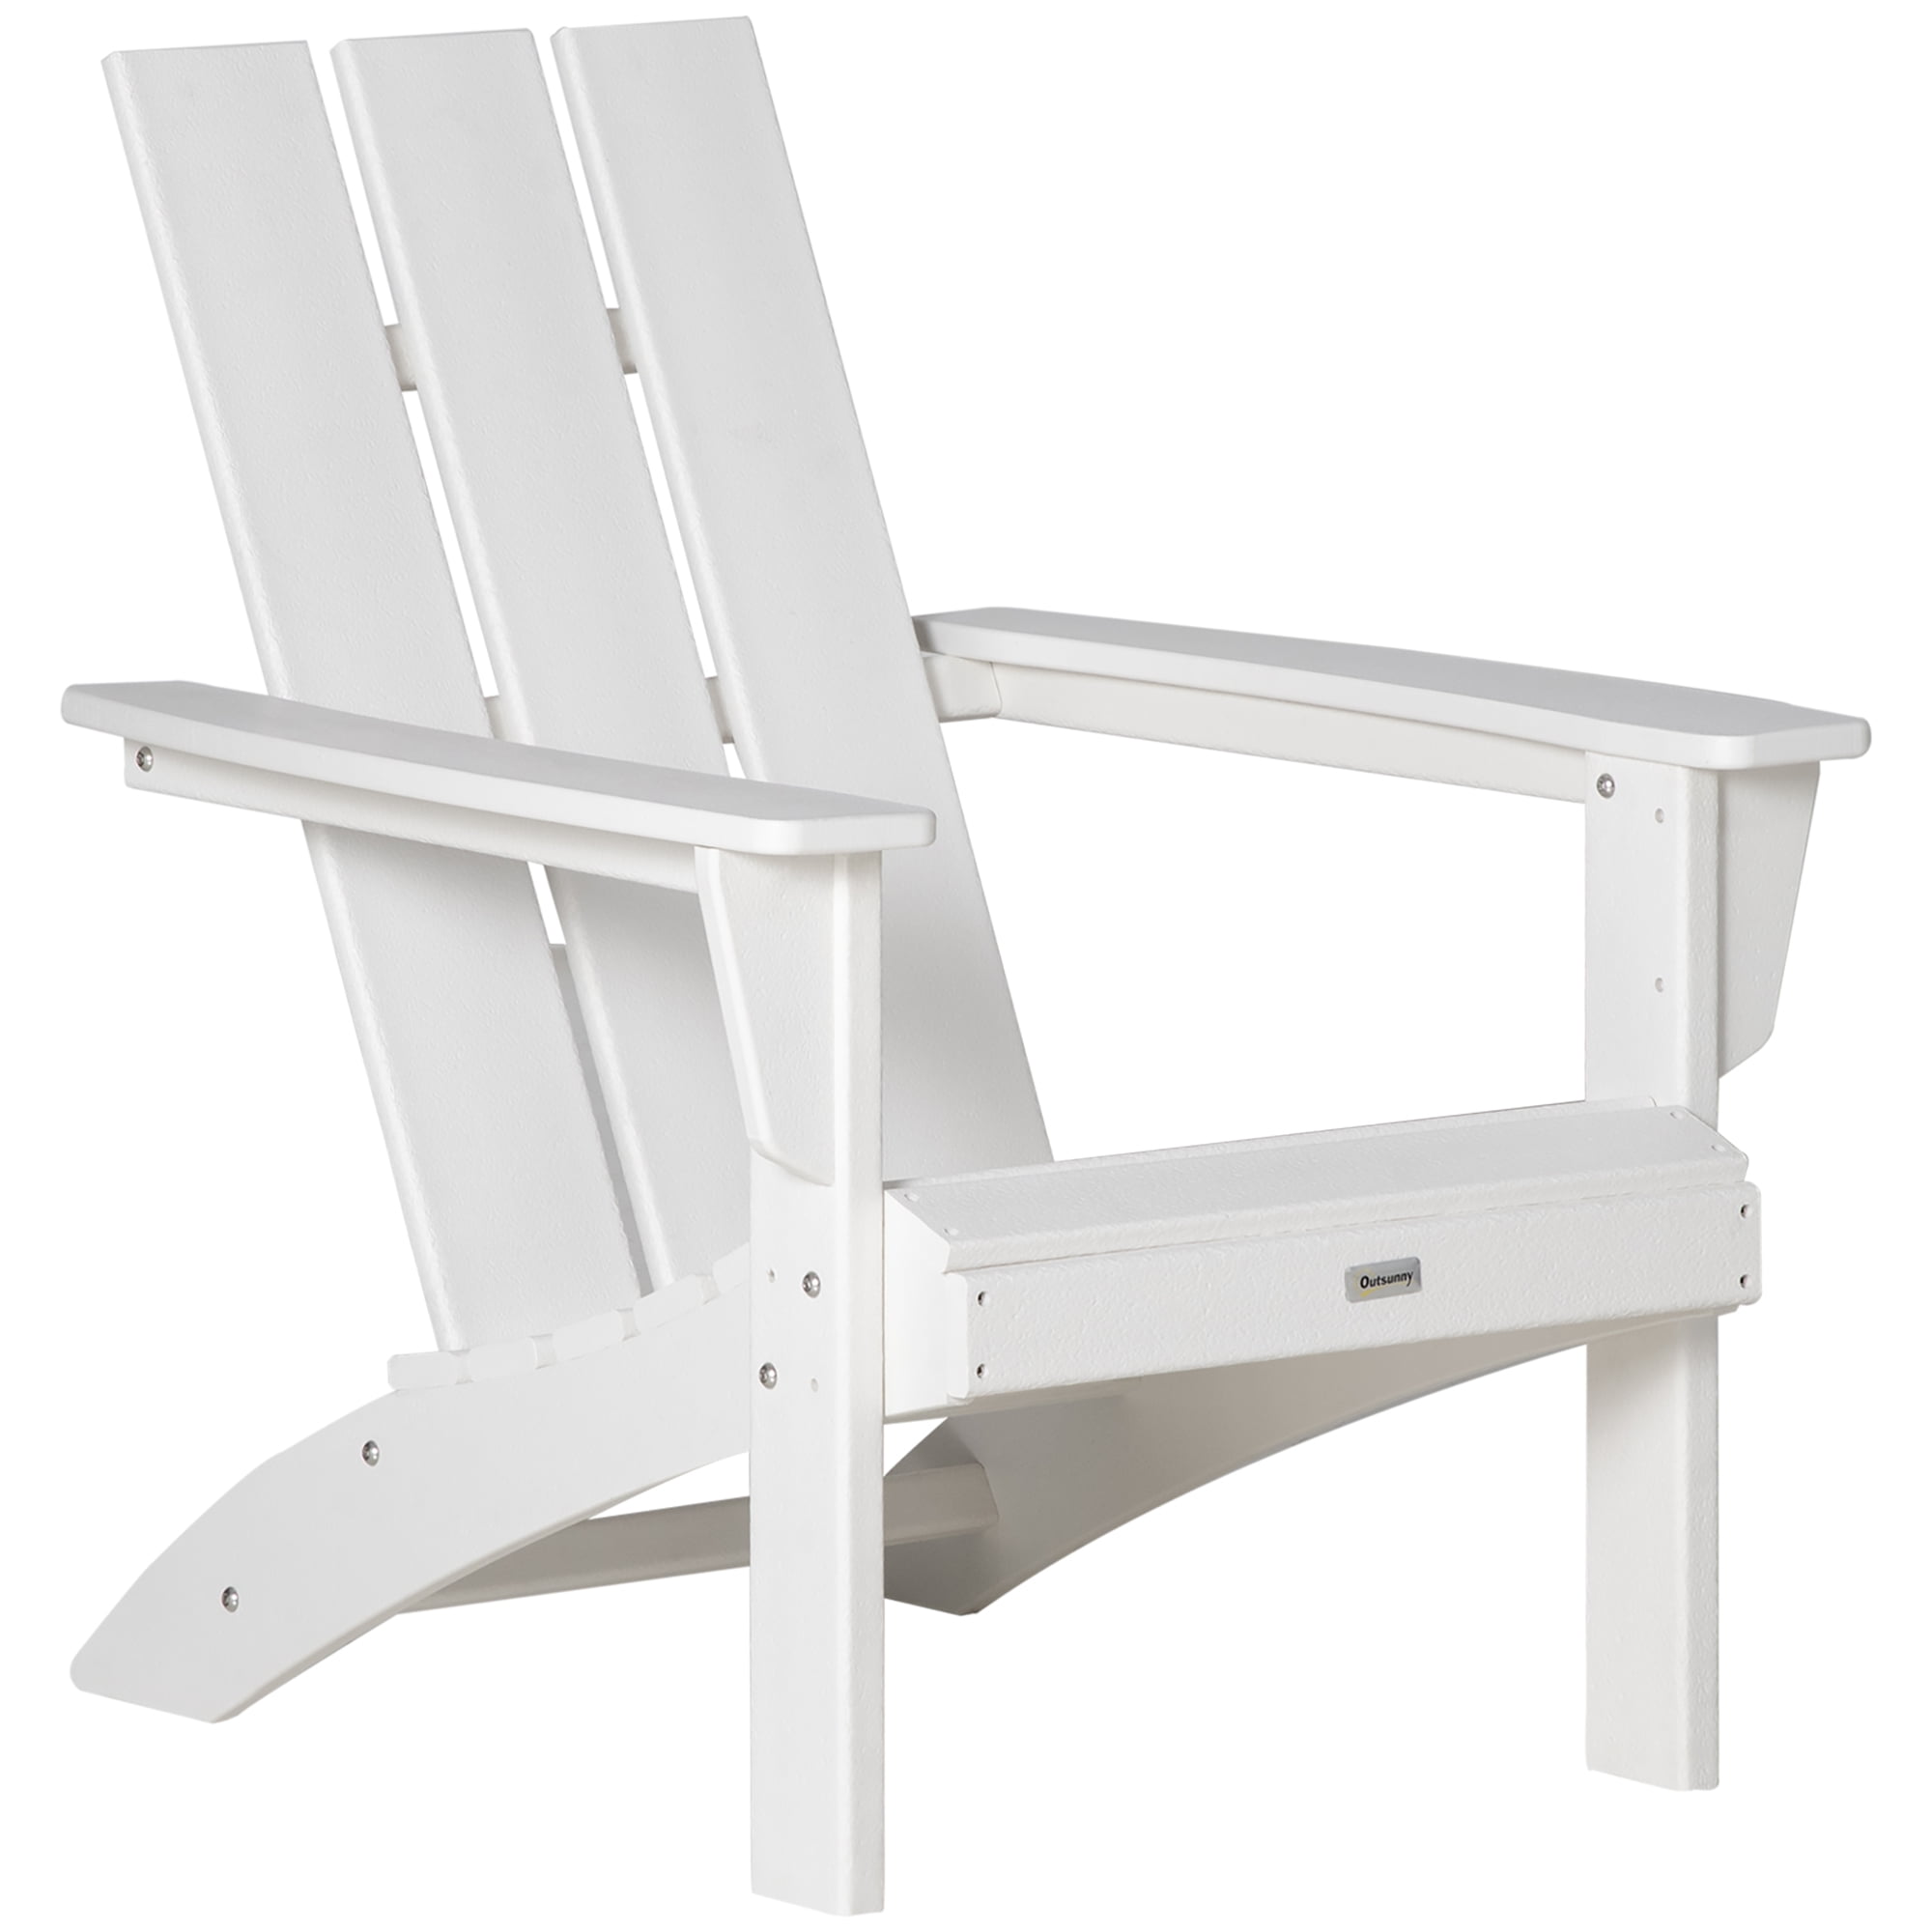 Keter Adirondack Chair Seat Indoor Outdoor Seating Furniture Garden White Resin 